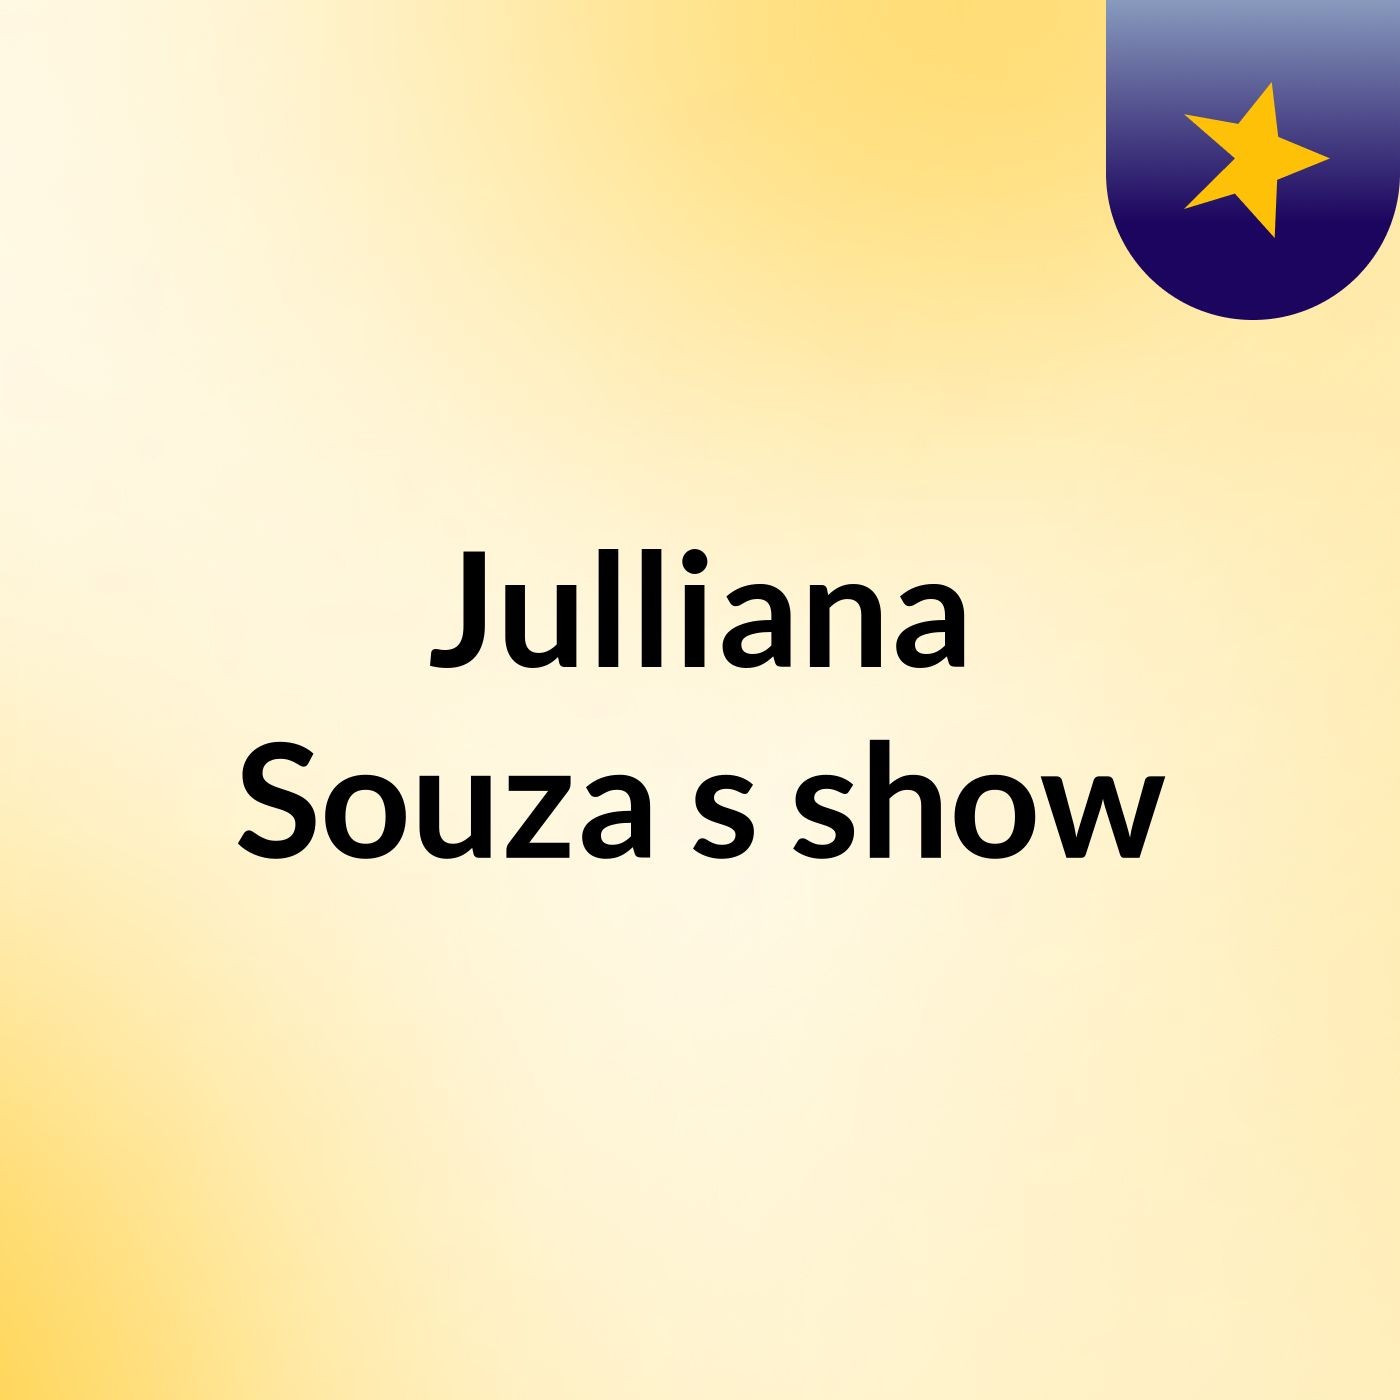 Julliana Souza's show